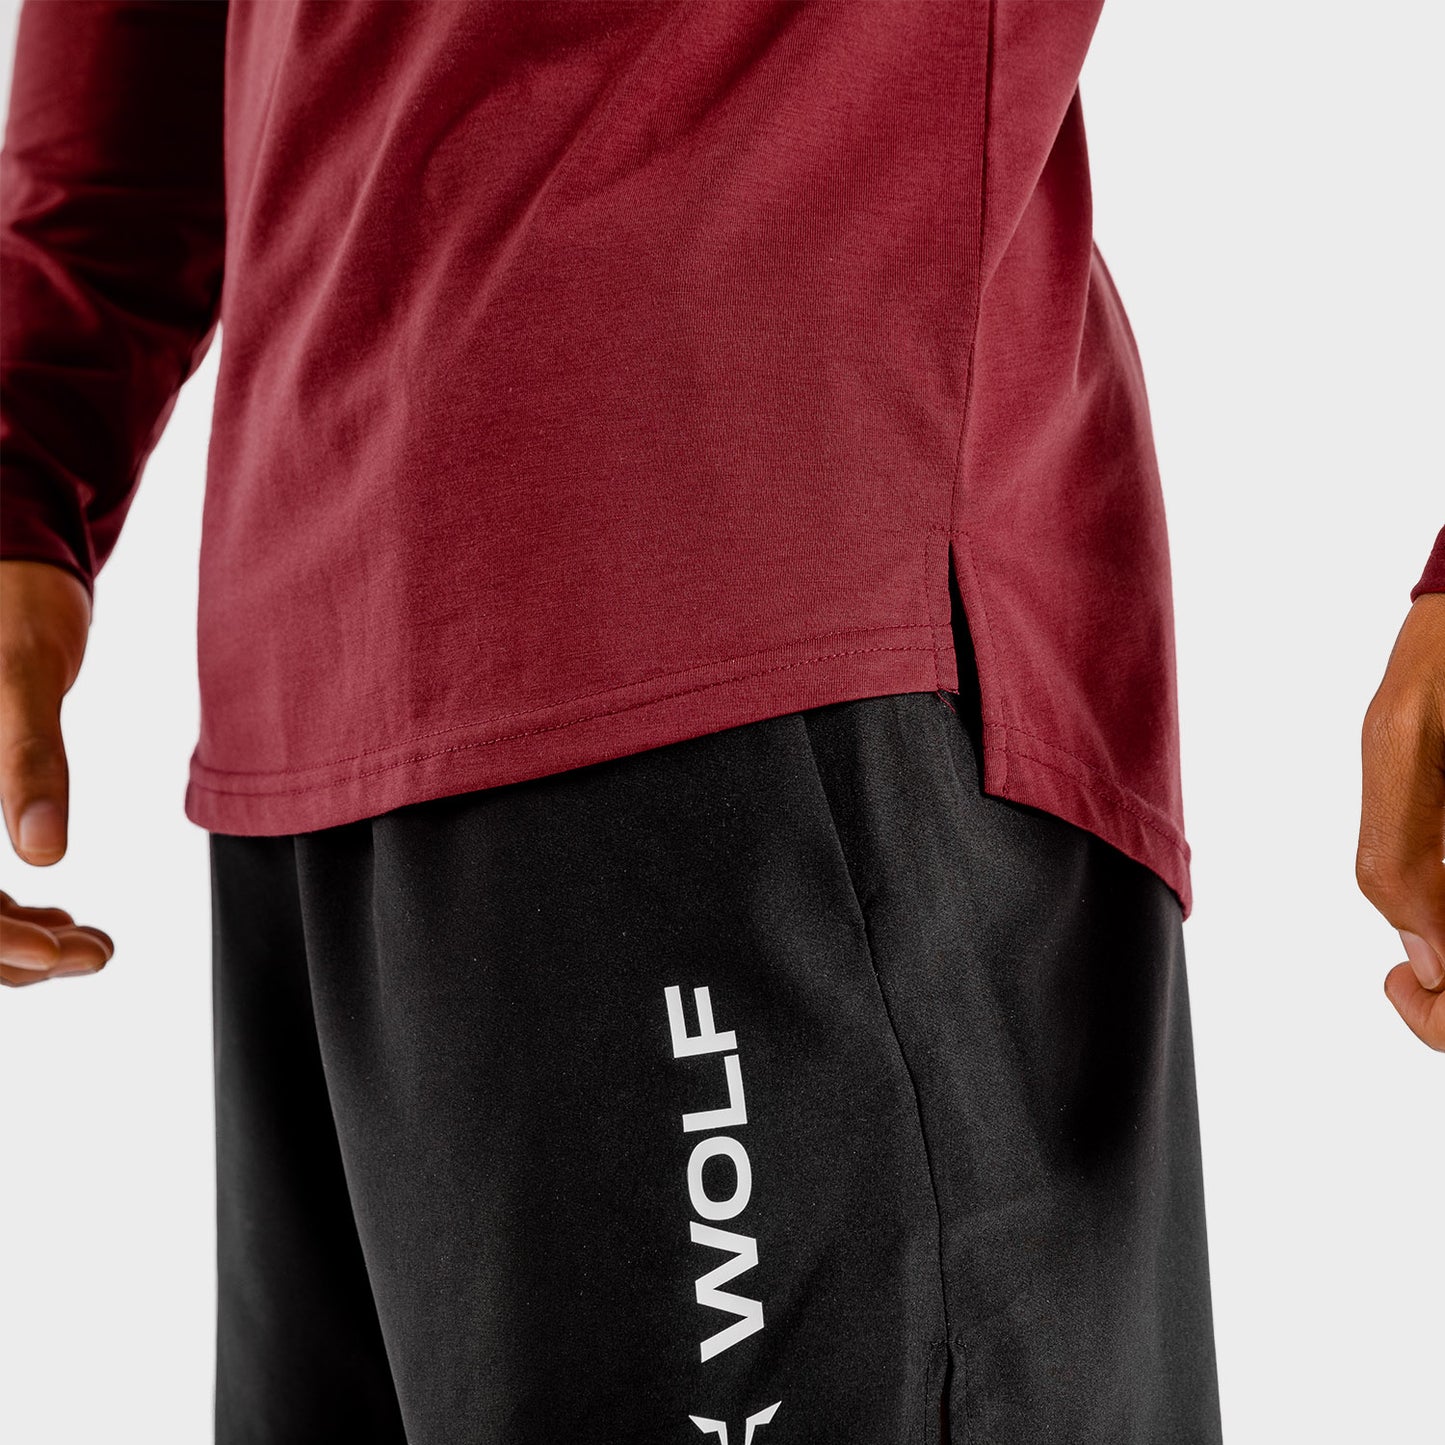 squatwolf-workout-shirts-for-men-primal-men-tee-teal-gym-wear